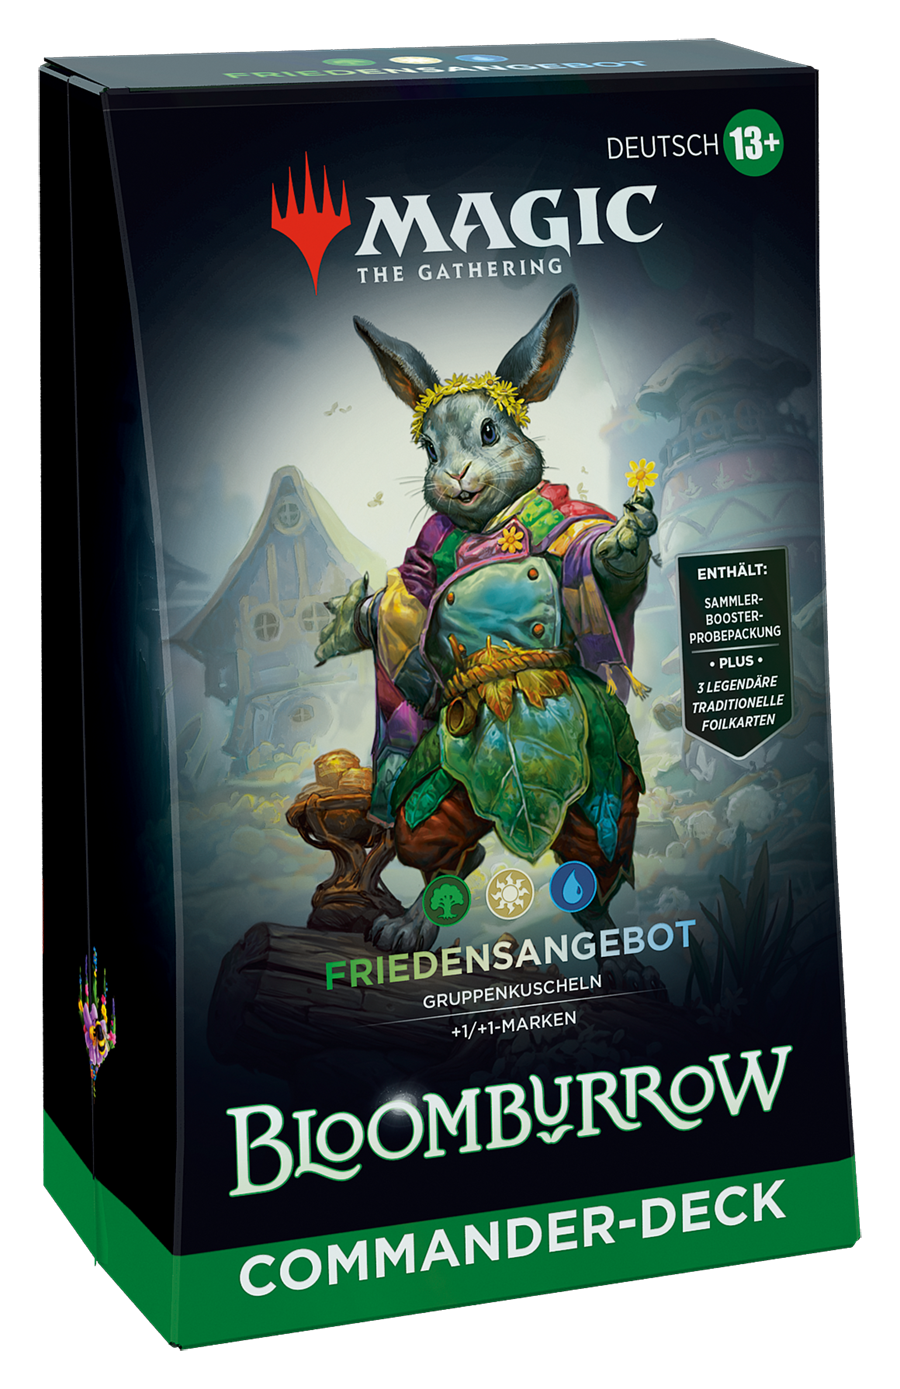 Magic: The Gathering Bloomburrow-Commander-Deck – Friedensangebot